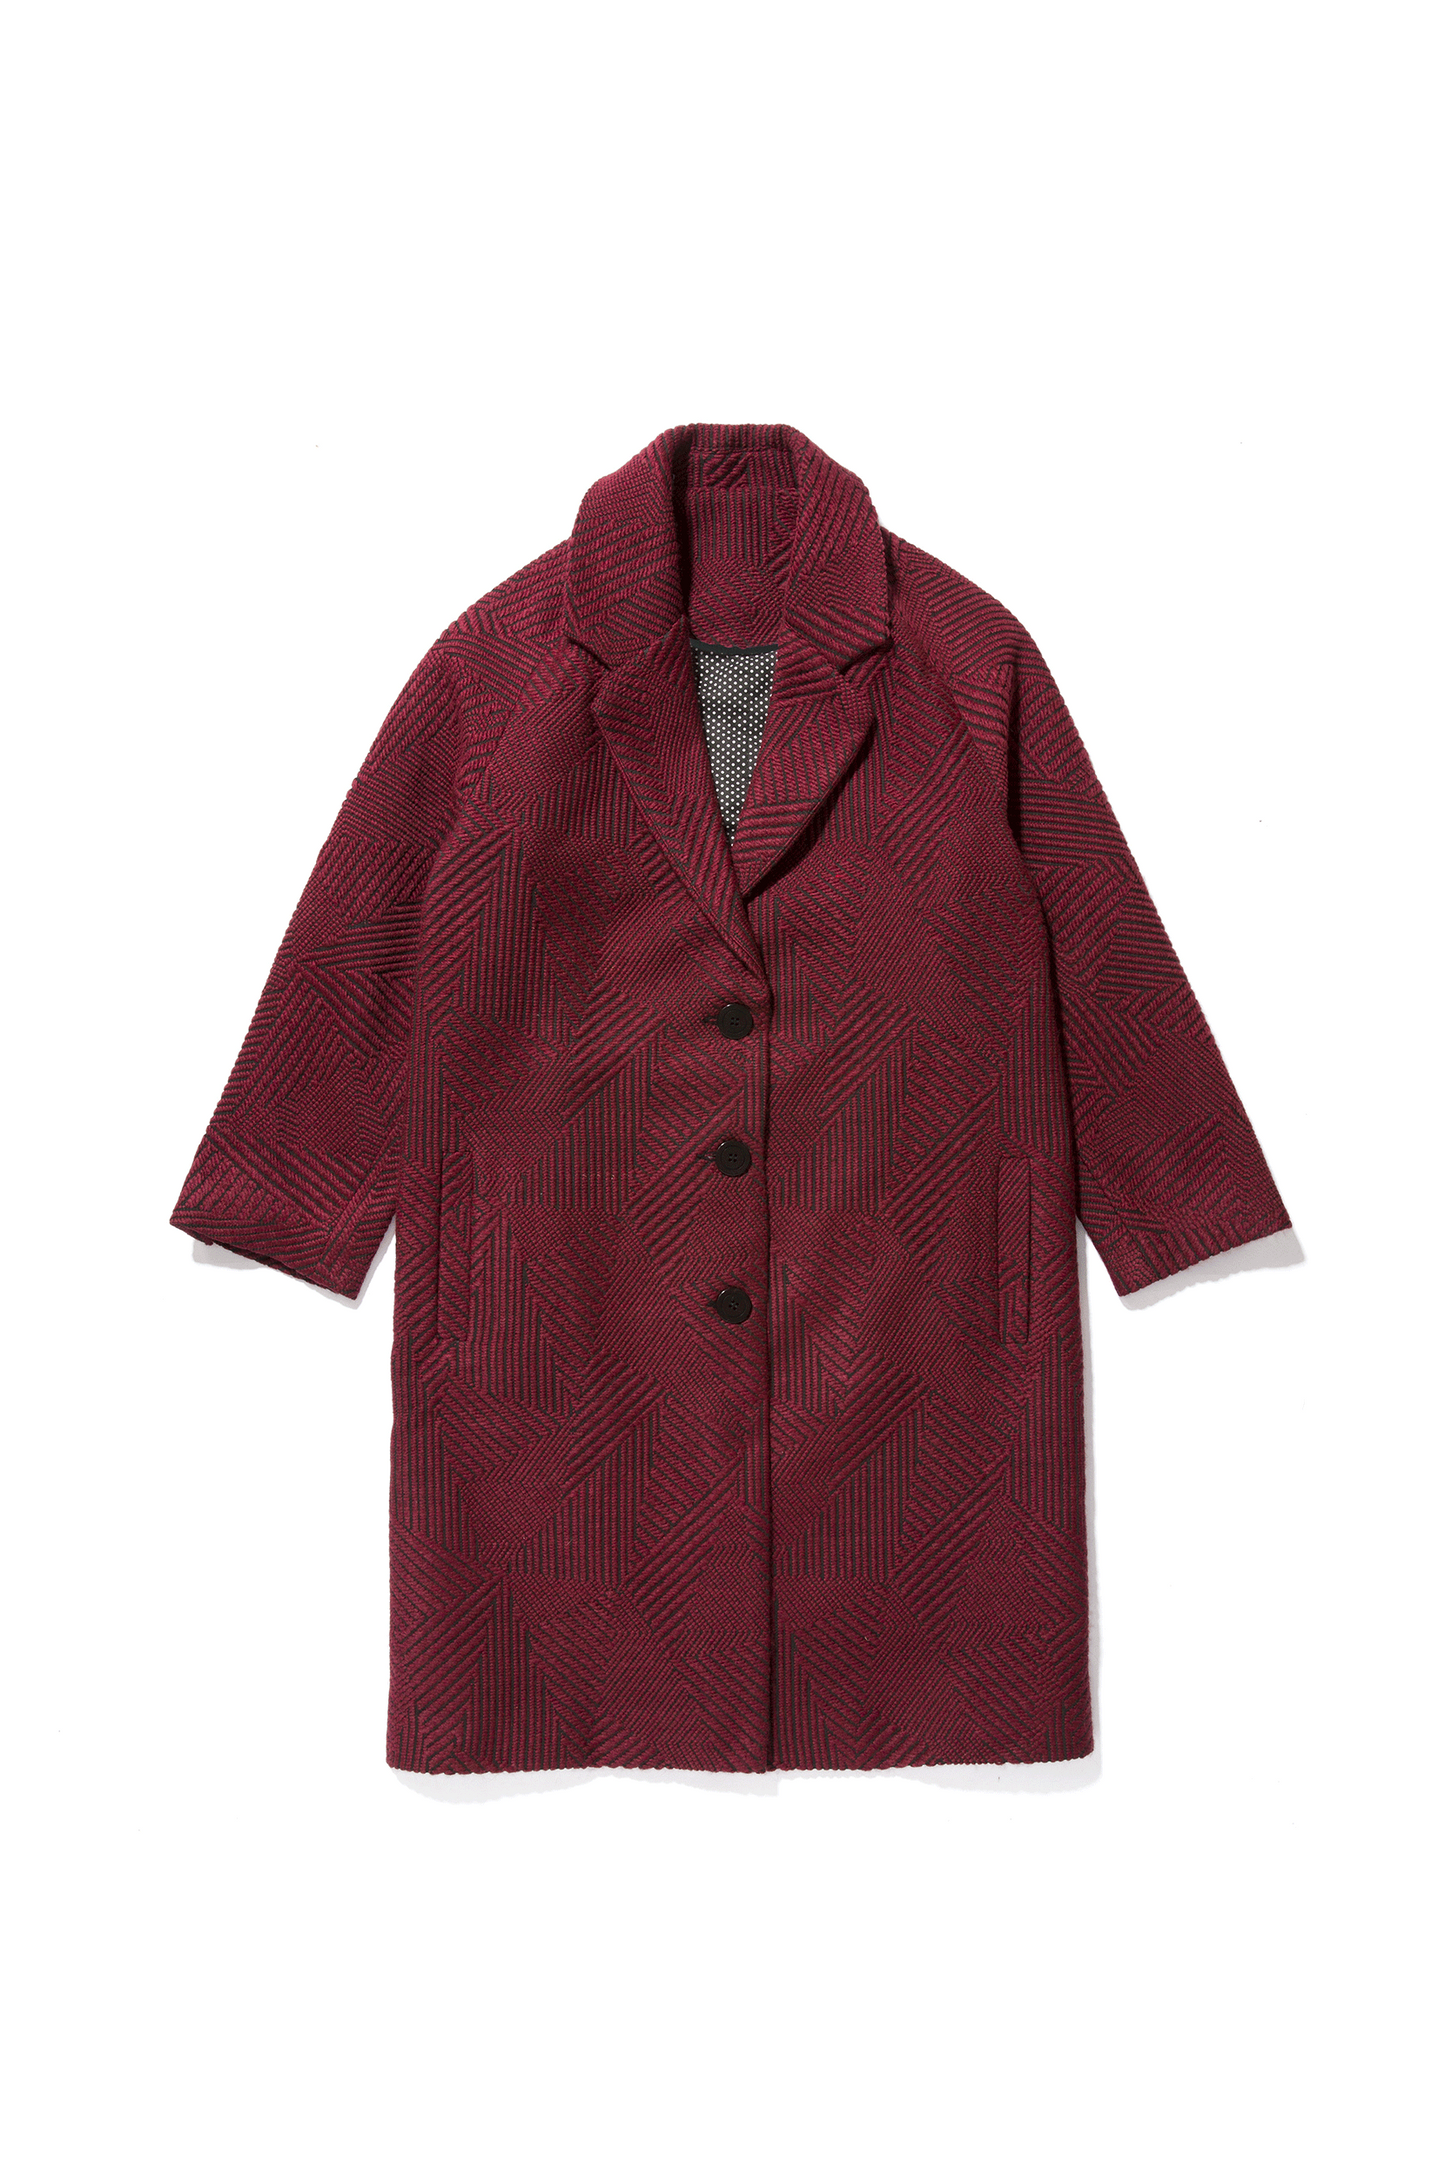 Benjamin burgundy jacquard coat